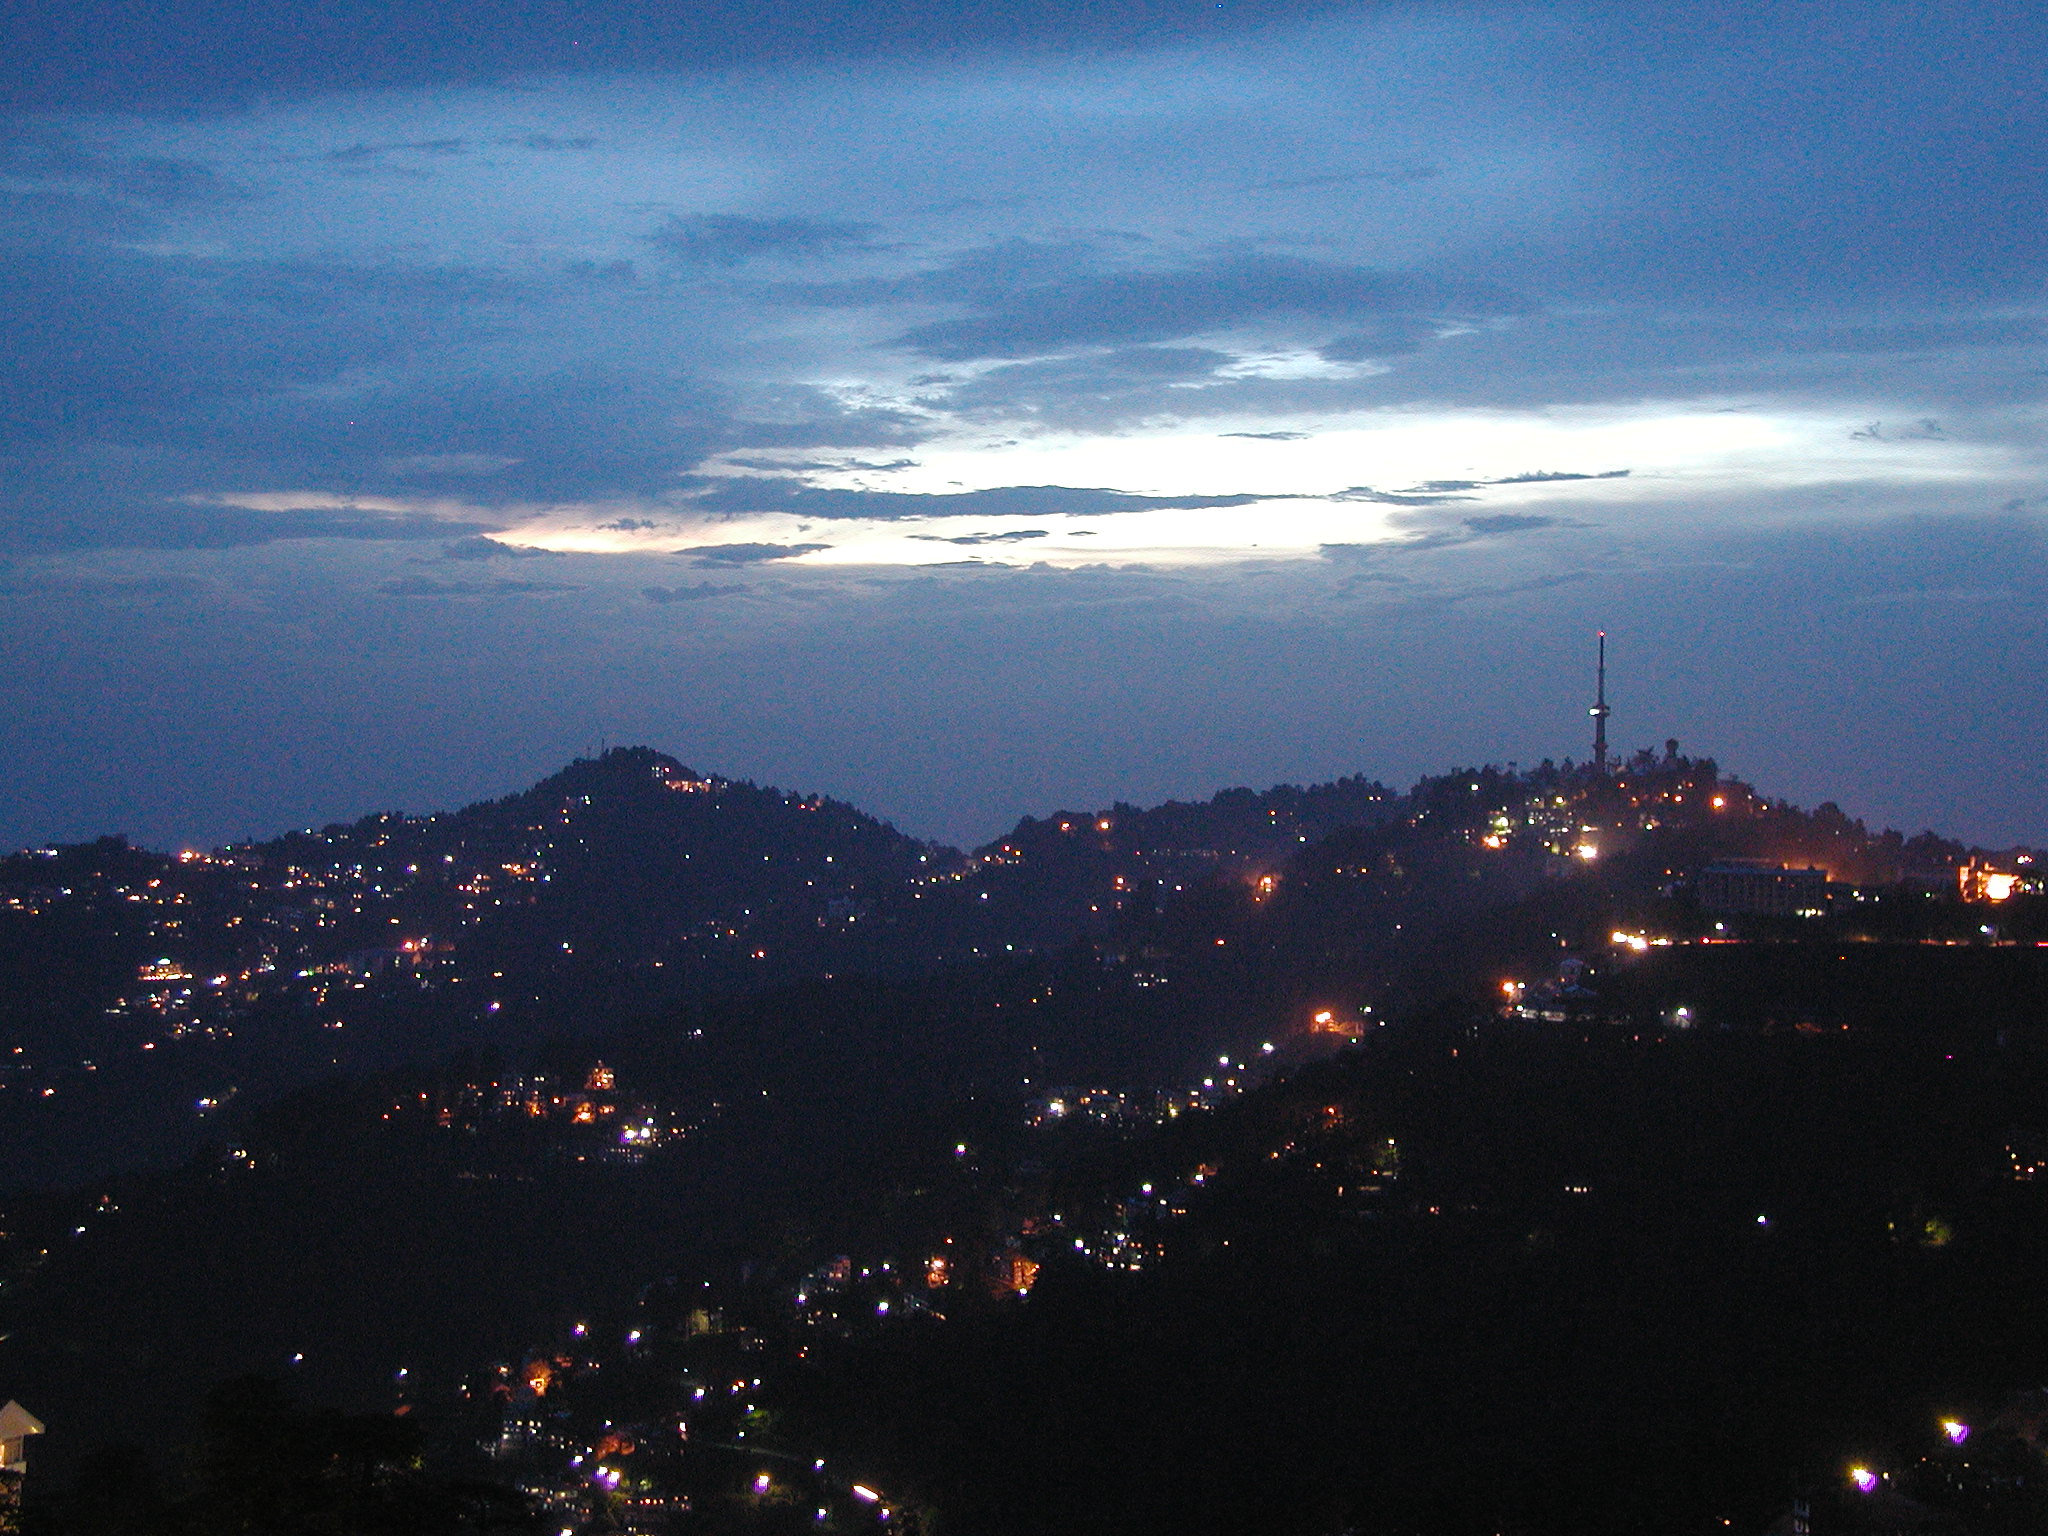 The city of Shimla at night